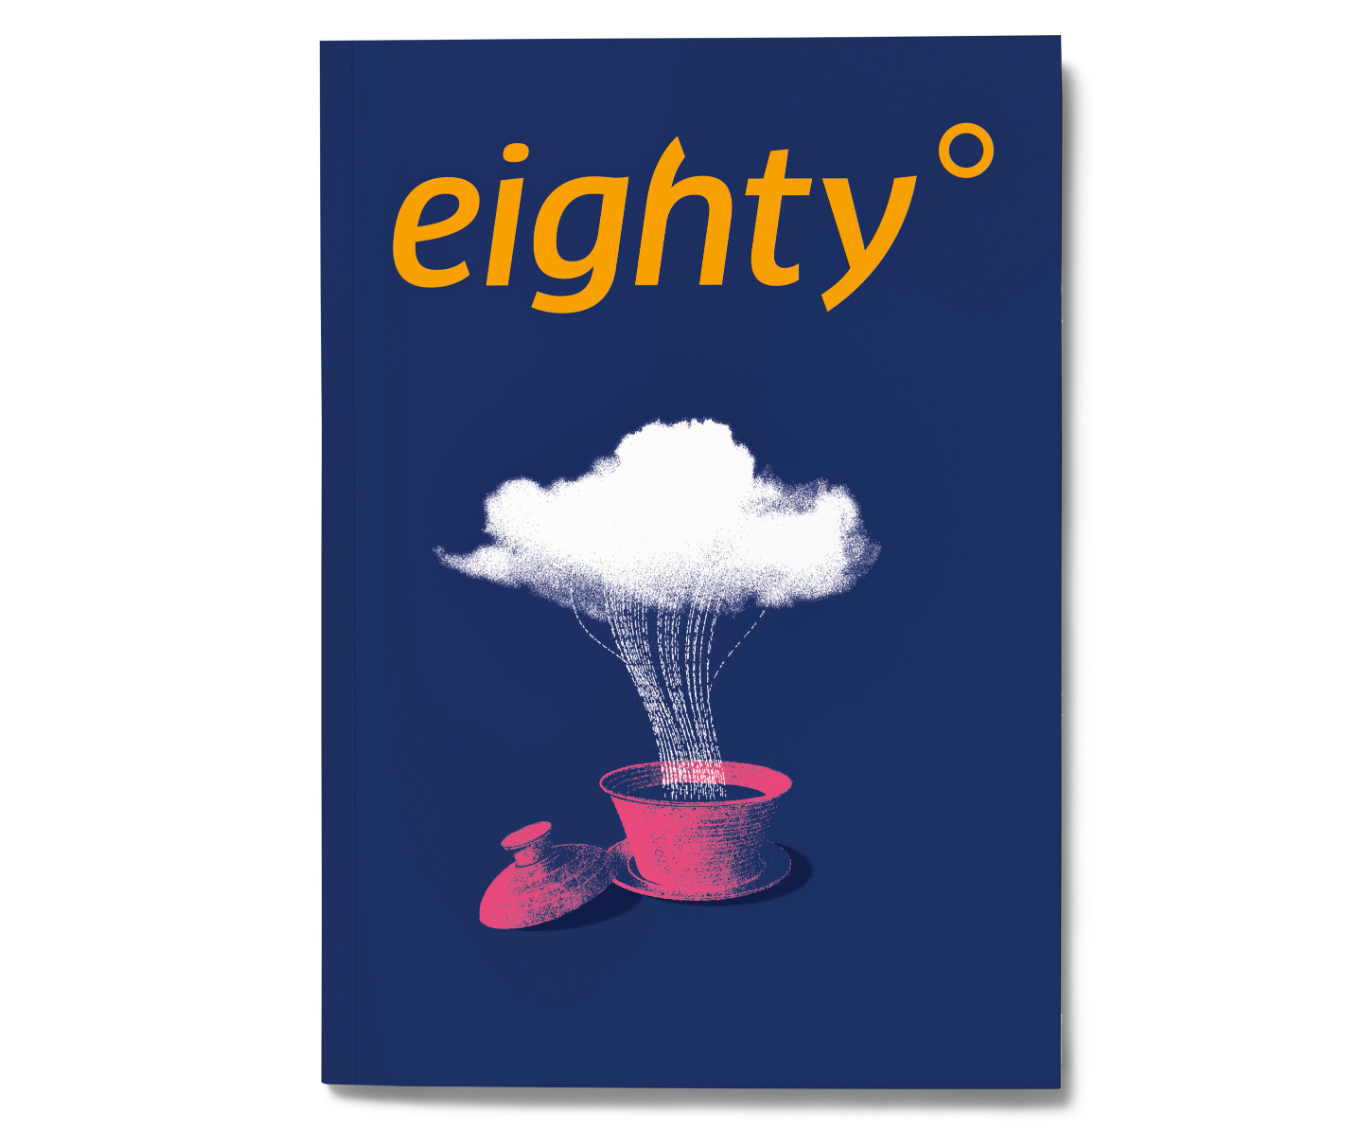 Eighty degrees tea magazine - Issue 10